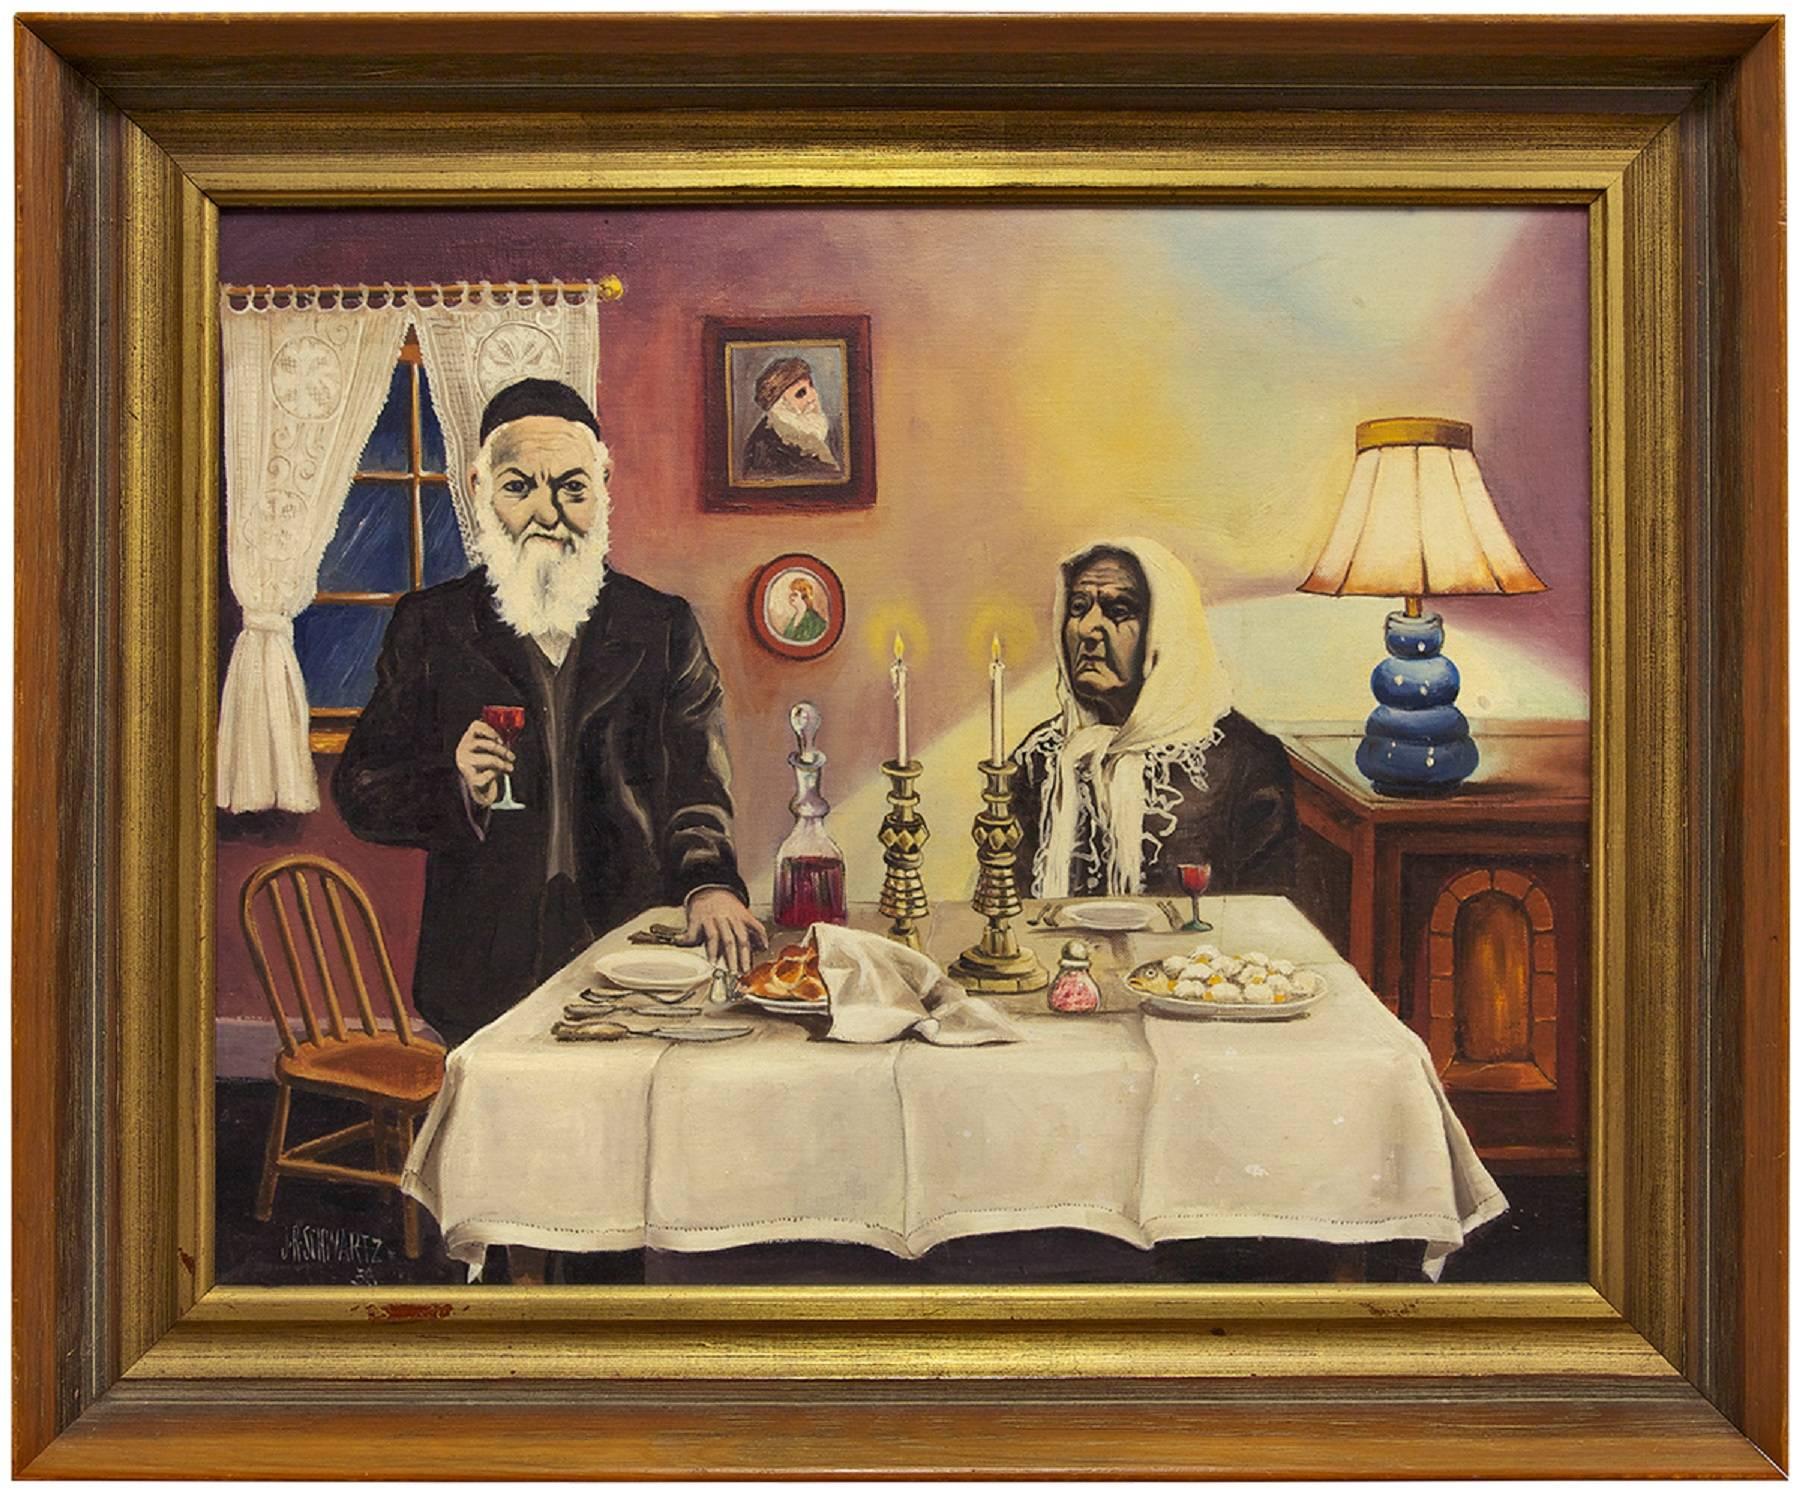 J. R. Schwartz Figurative Painting - Old World Shabbat Dinner